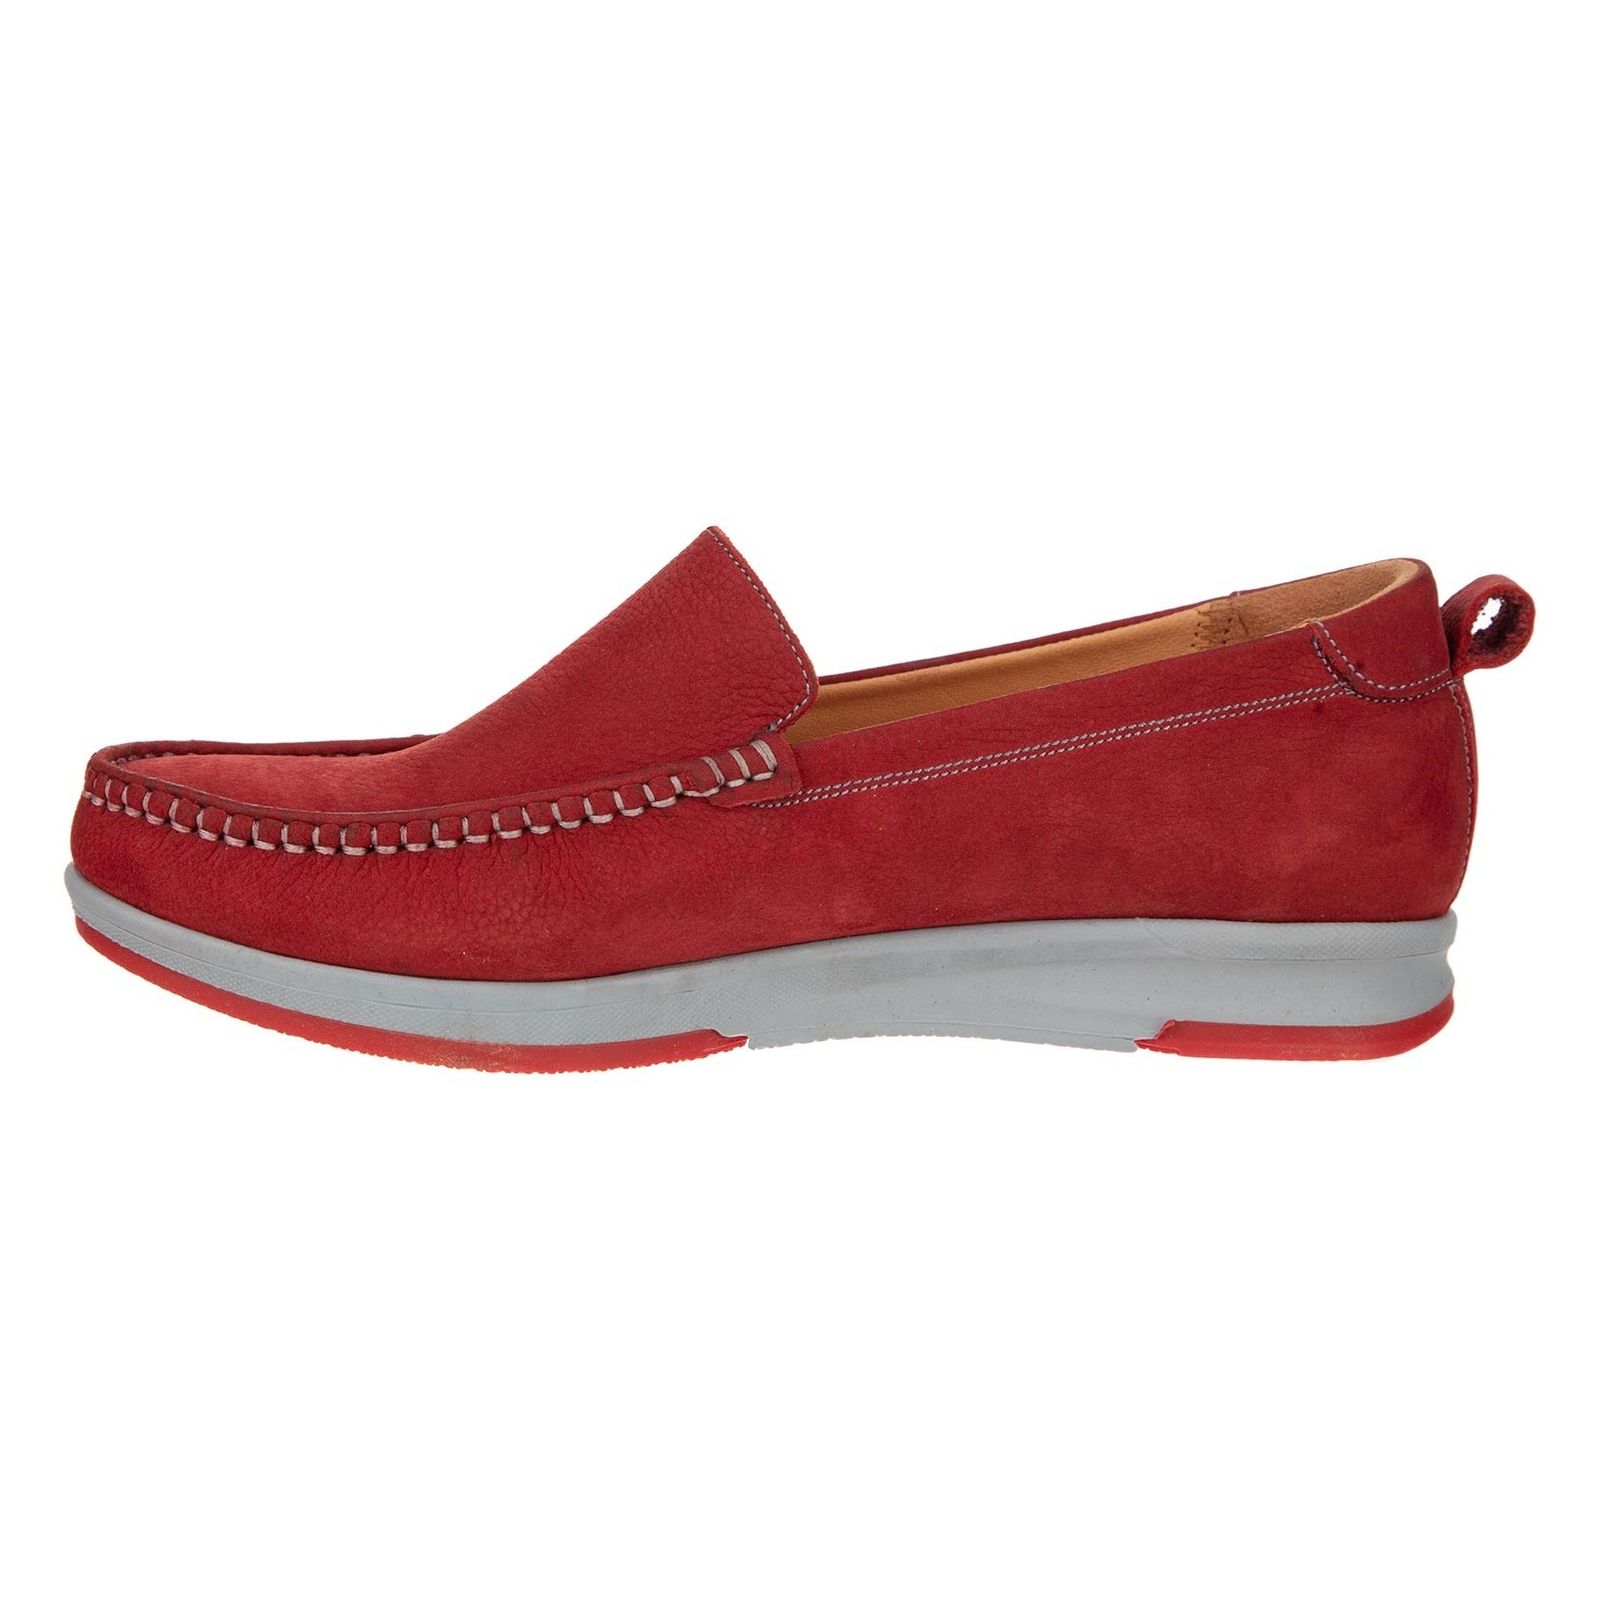 کفش تخت چرم زنانه - برتونیکس - قرمز - 5